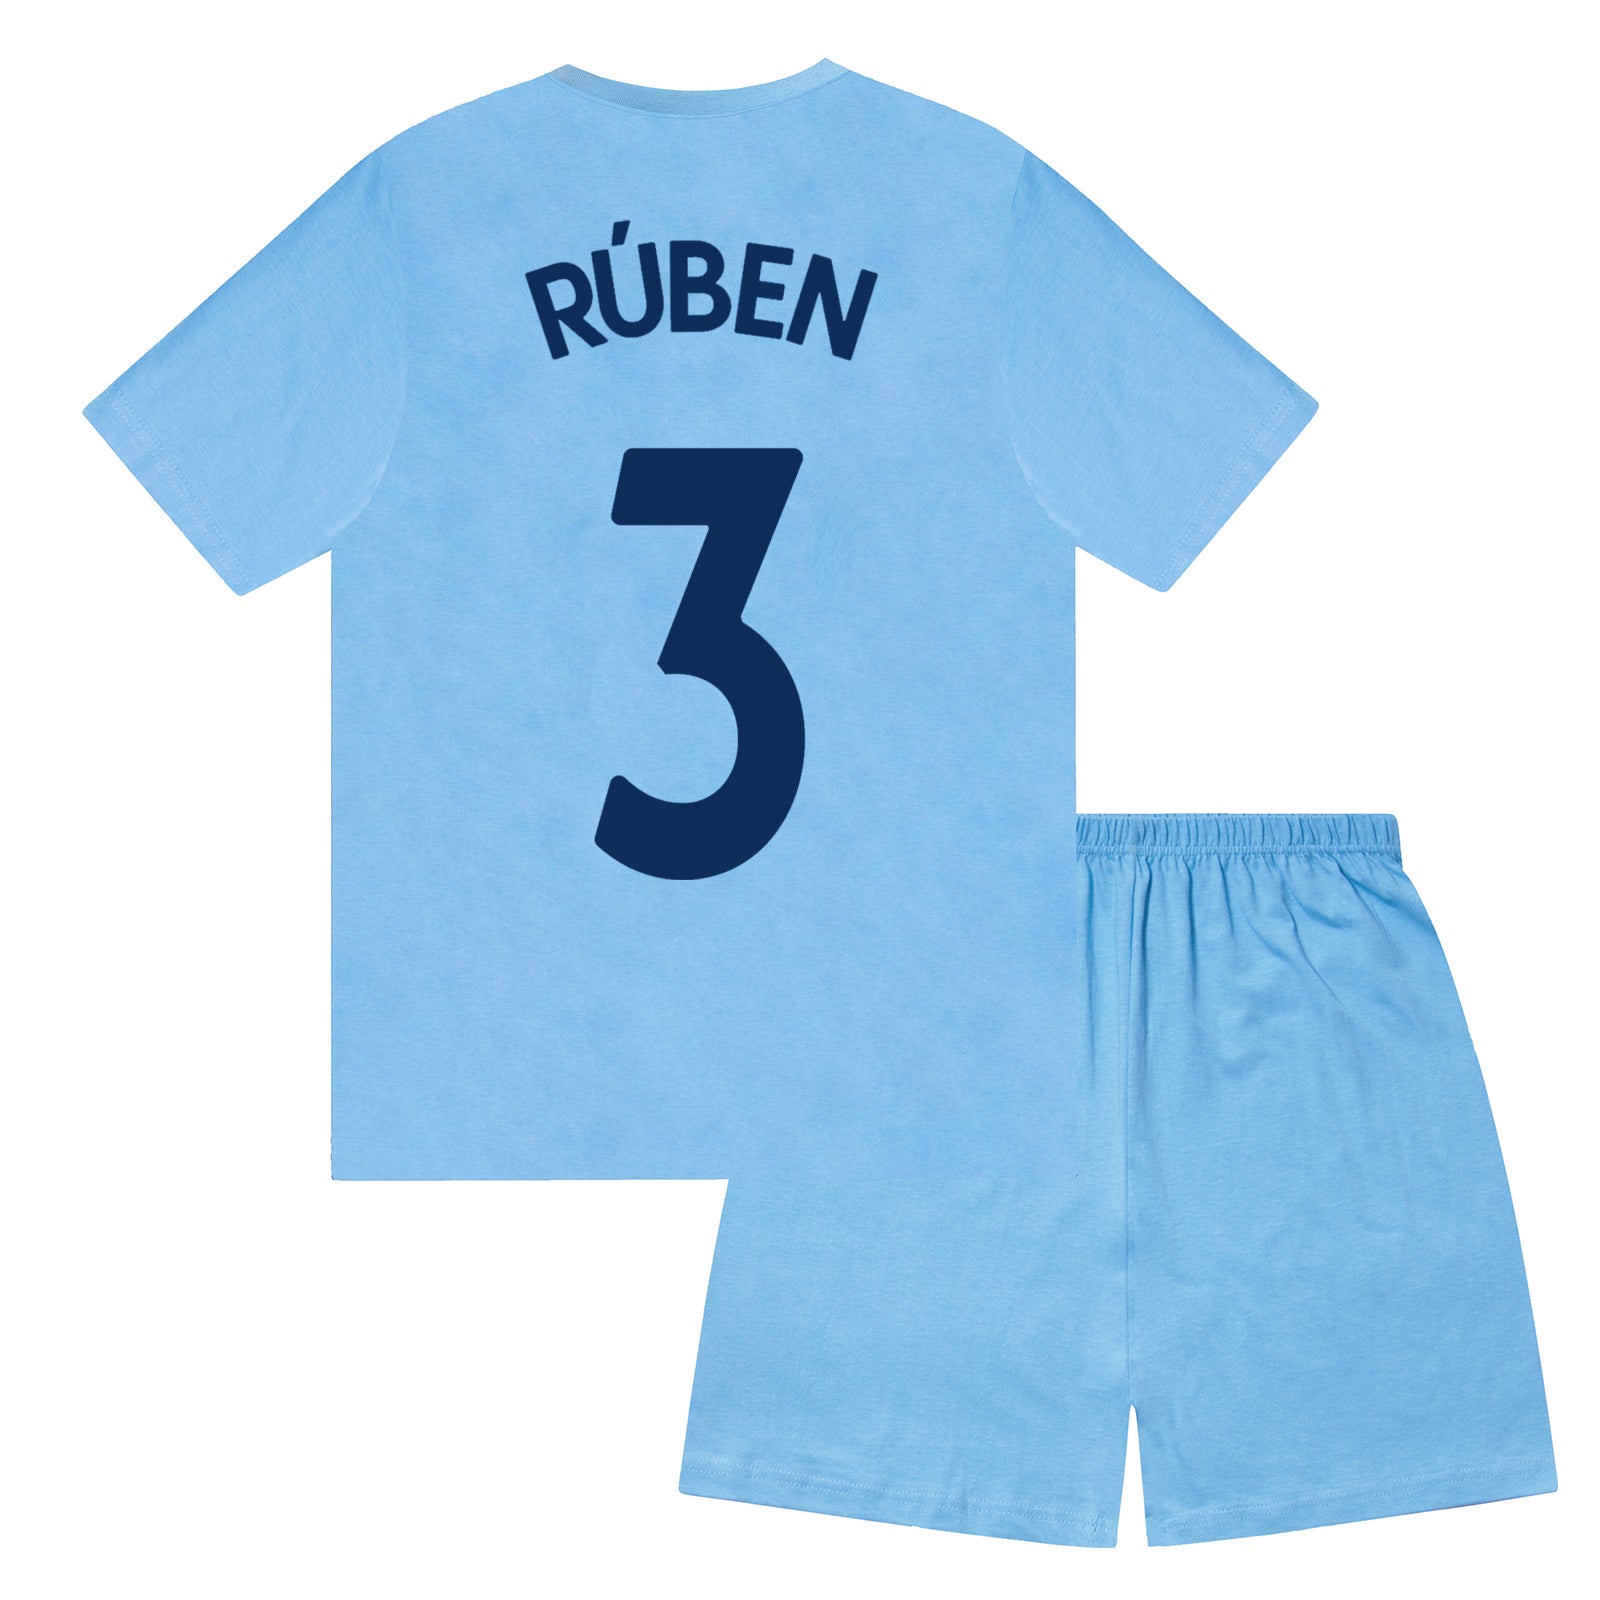 Navy Blue Ruben